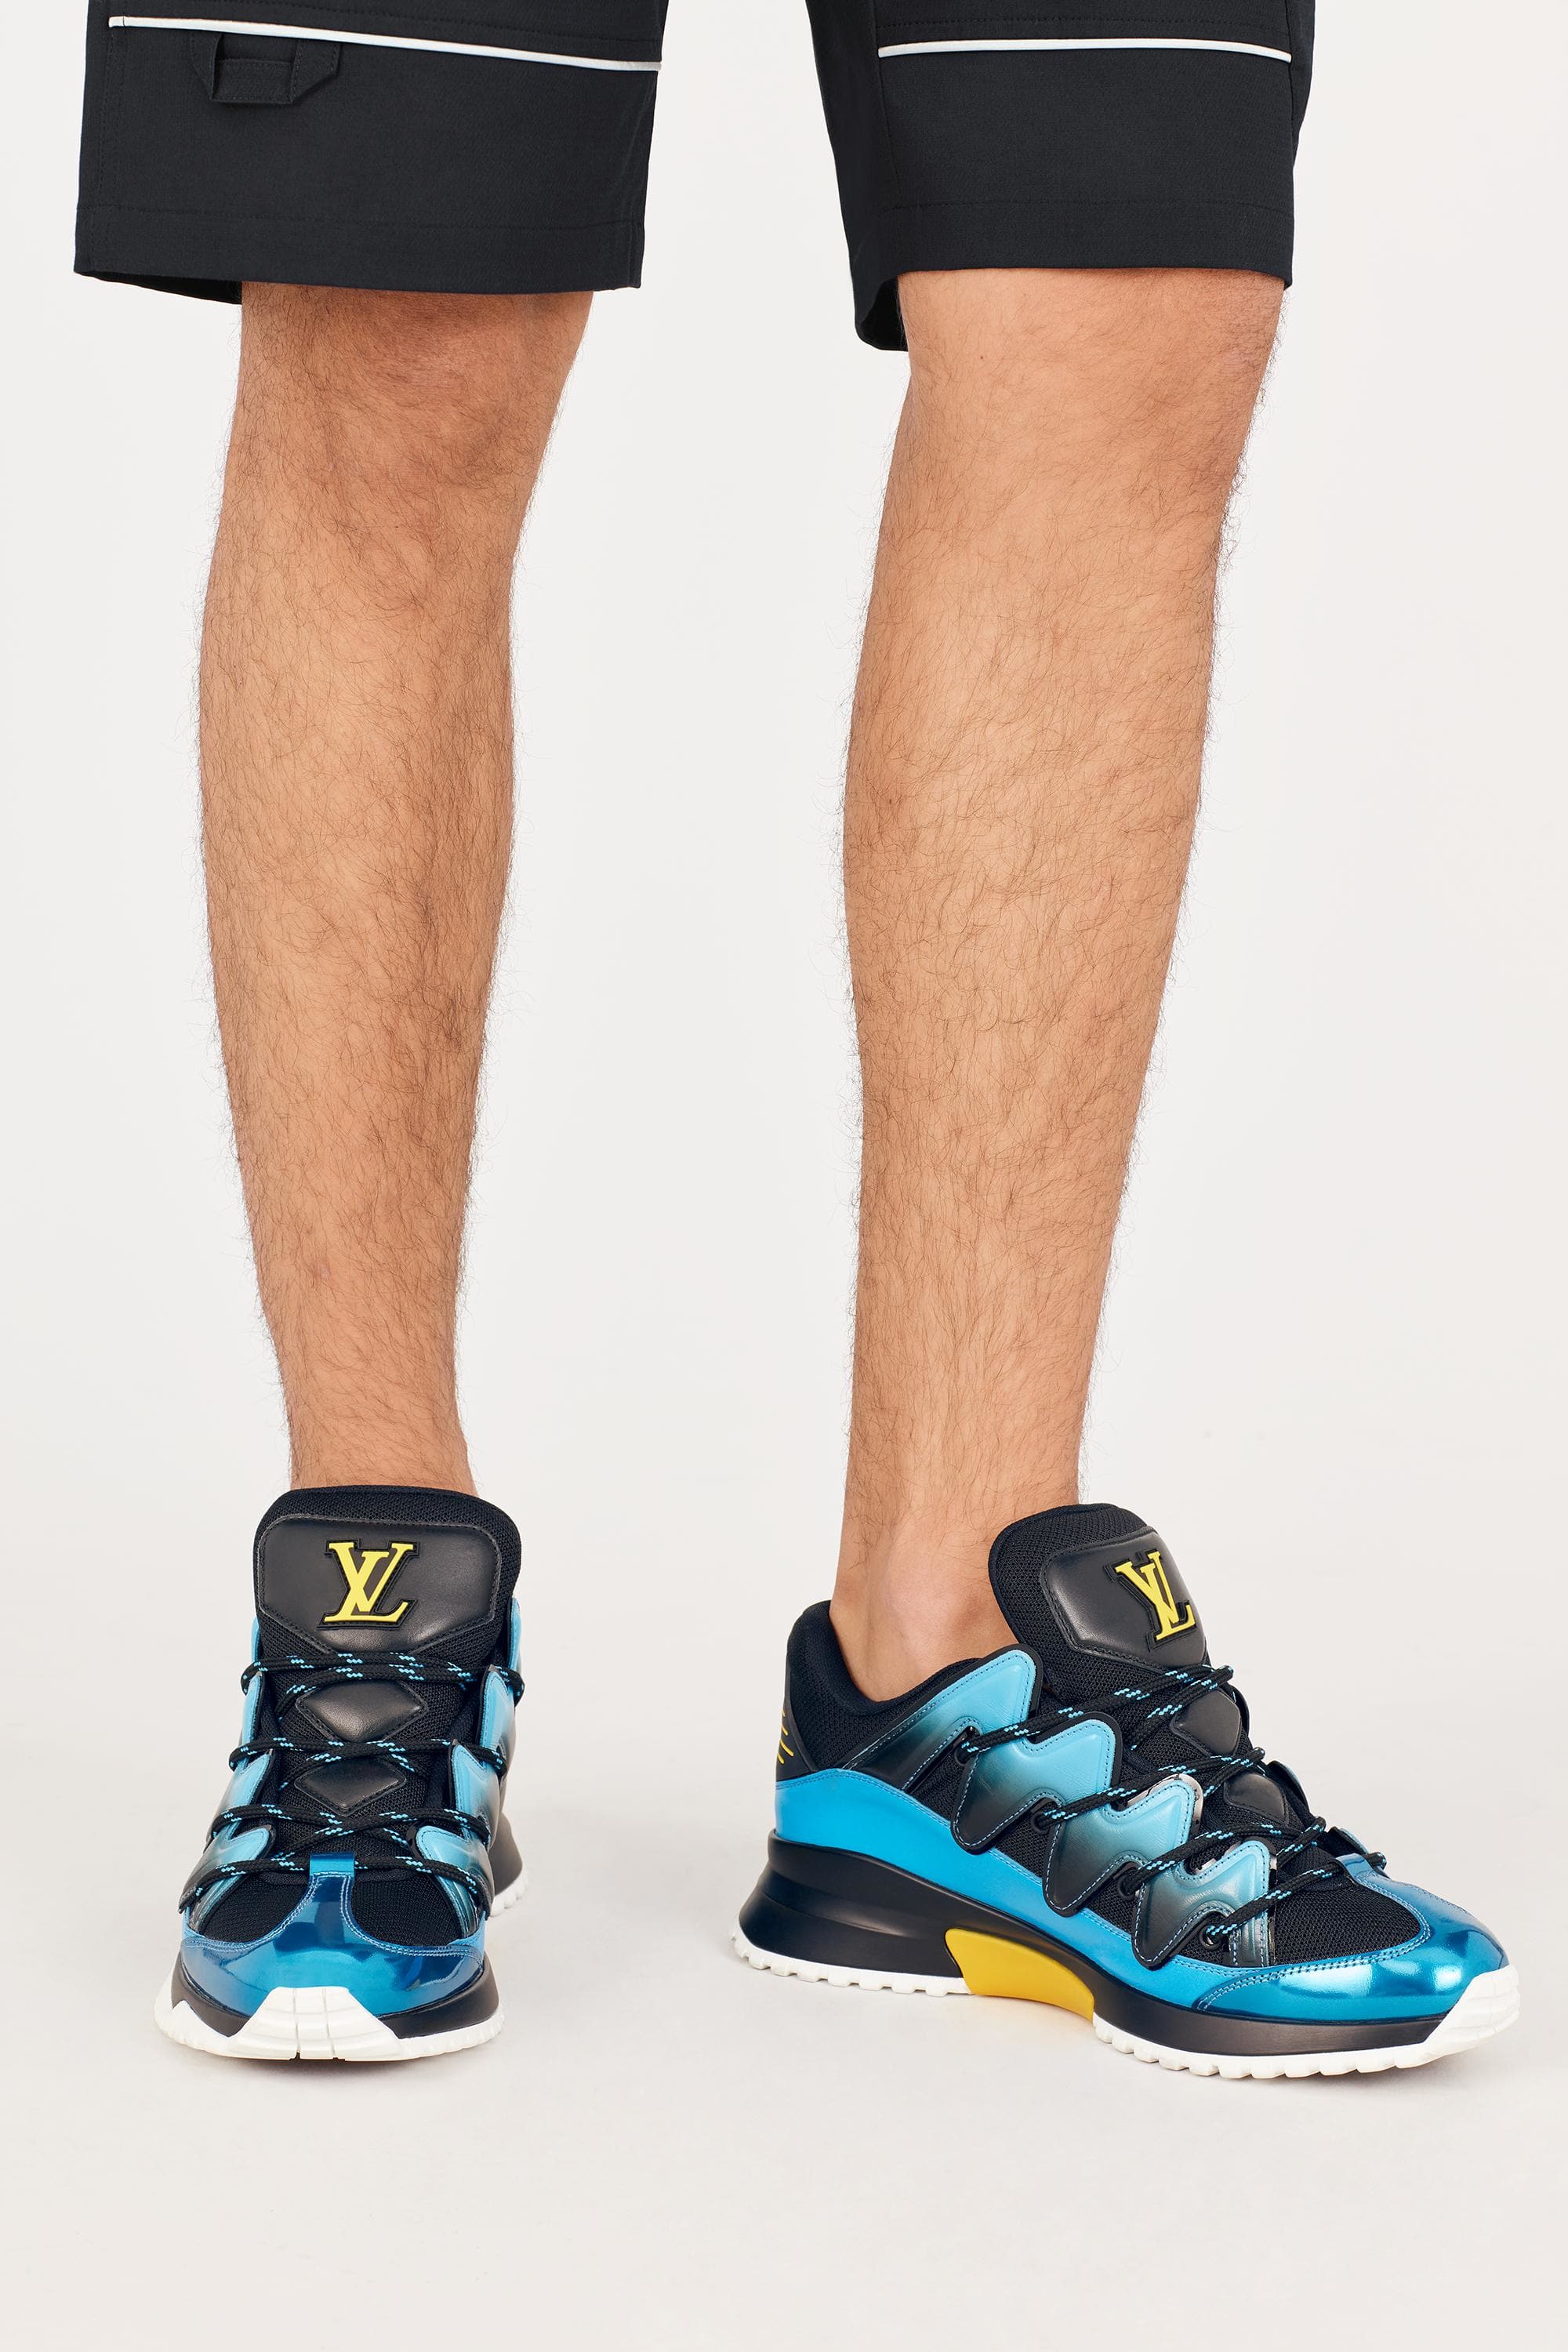 DON'T SLEEP! Louis Vuitton LV Skate Sneaker Biege (Review) + ON FOOT 